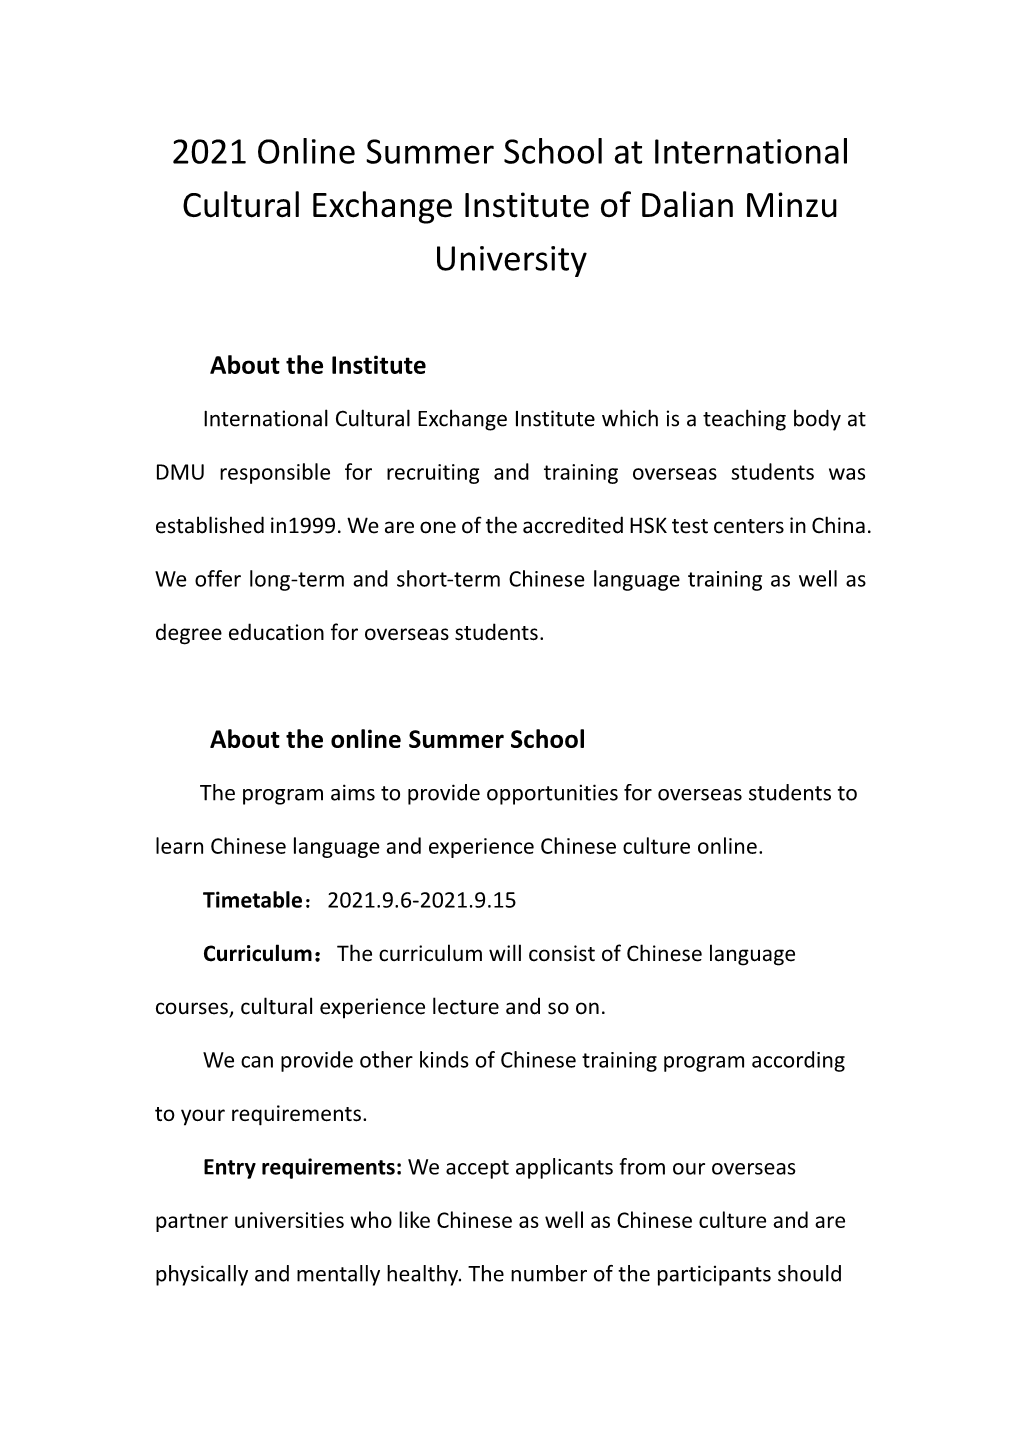 2021 Online Summer School at International Cultural Exchange Institute of Dalian Minzu University